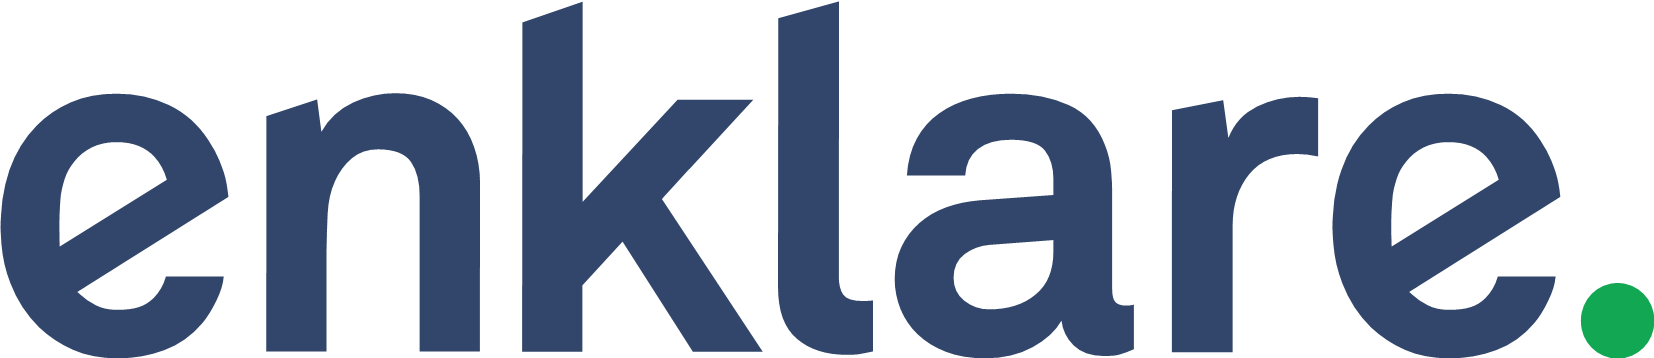 Company logo for Enklare